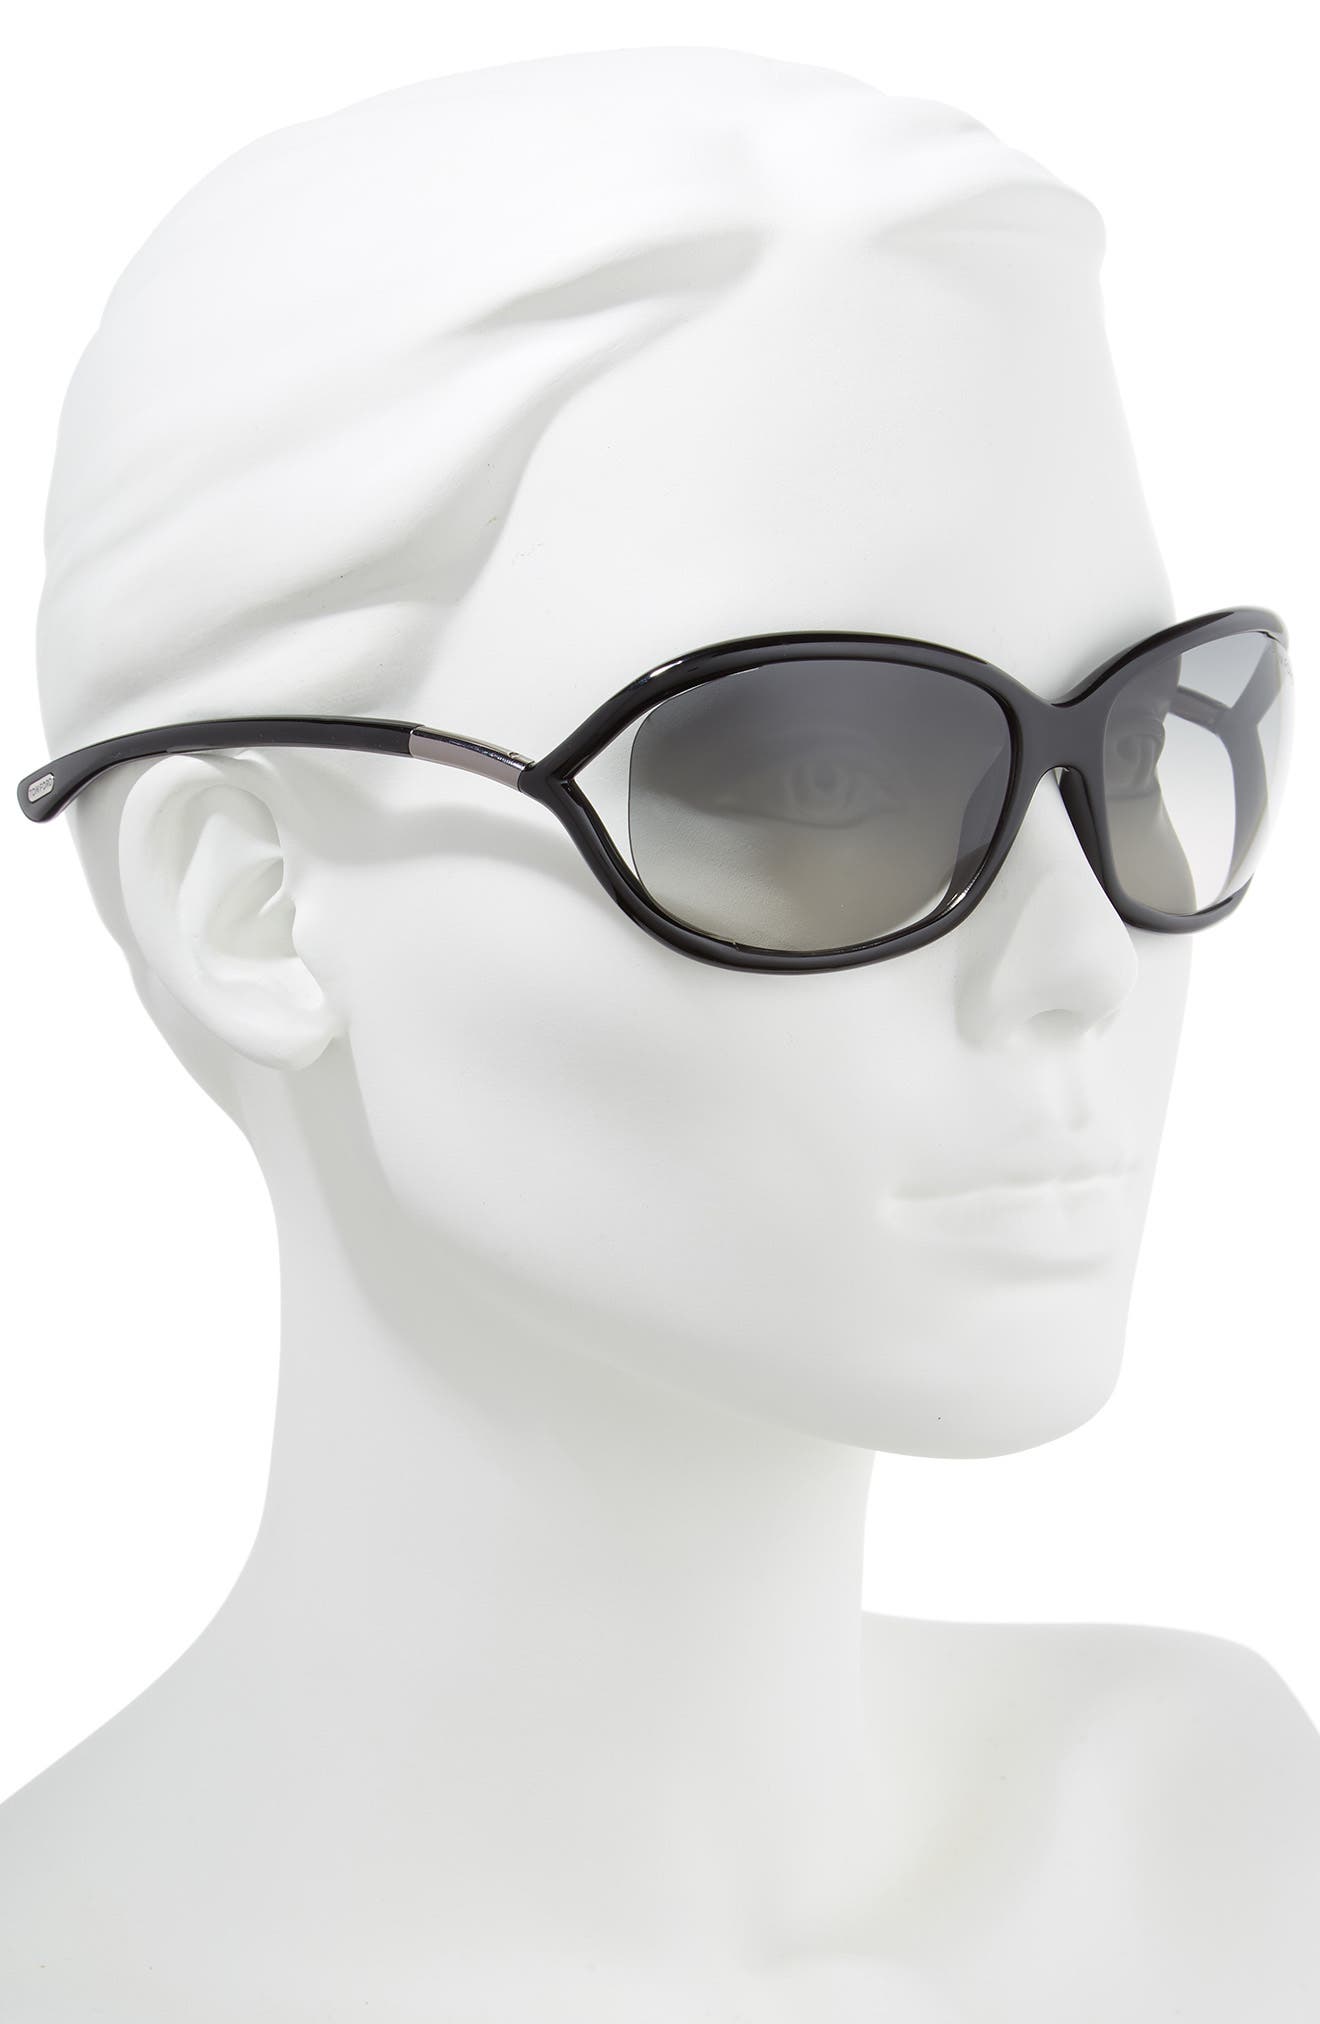 tom ford bella sunglasses,cheap - OFF 65% 